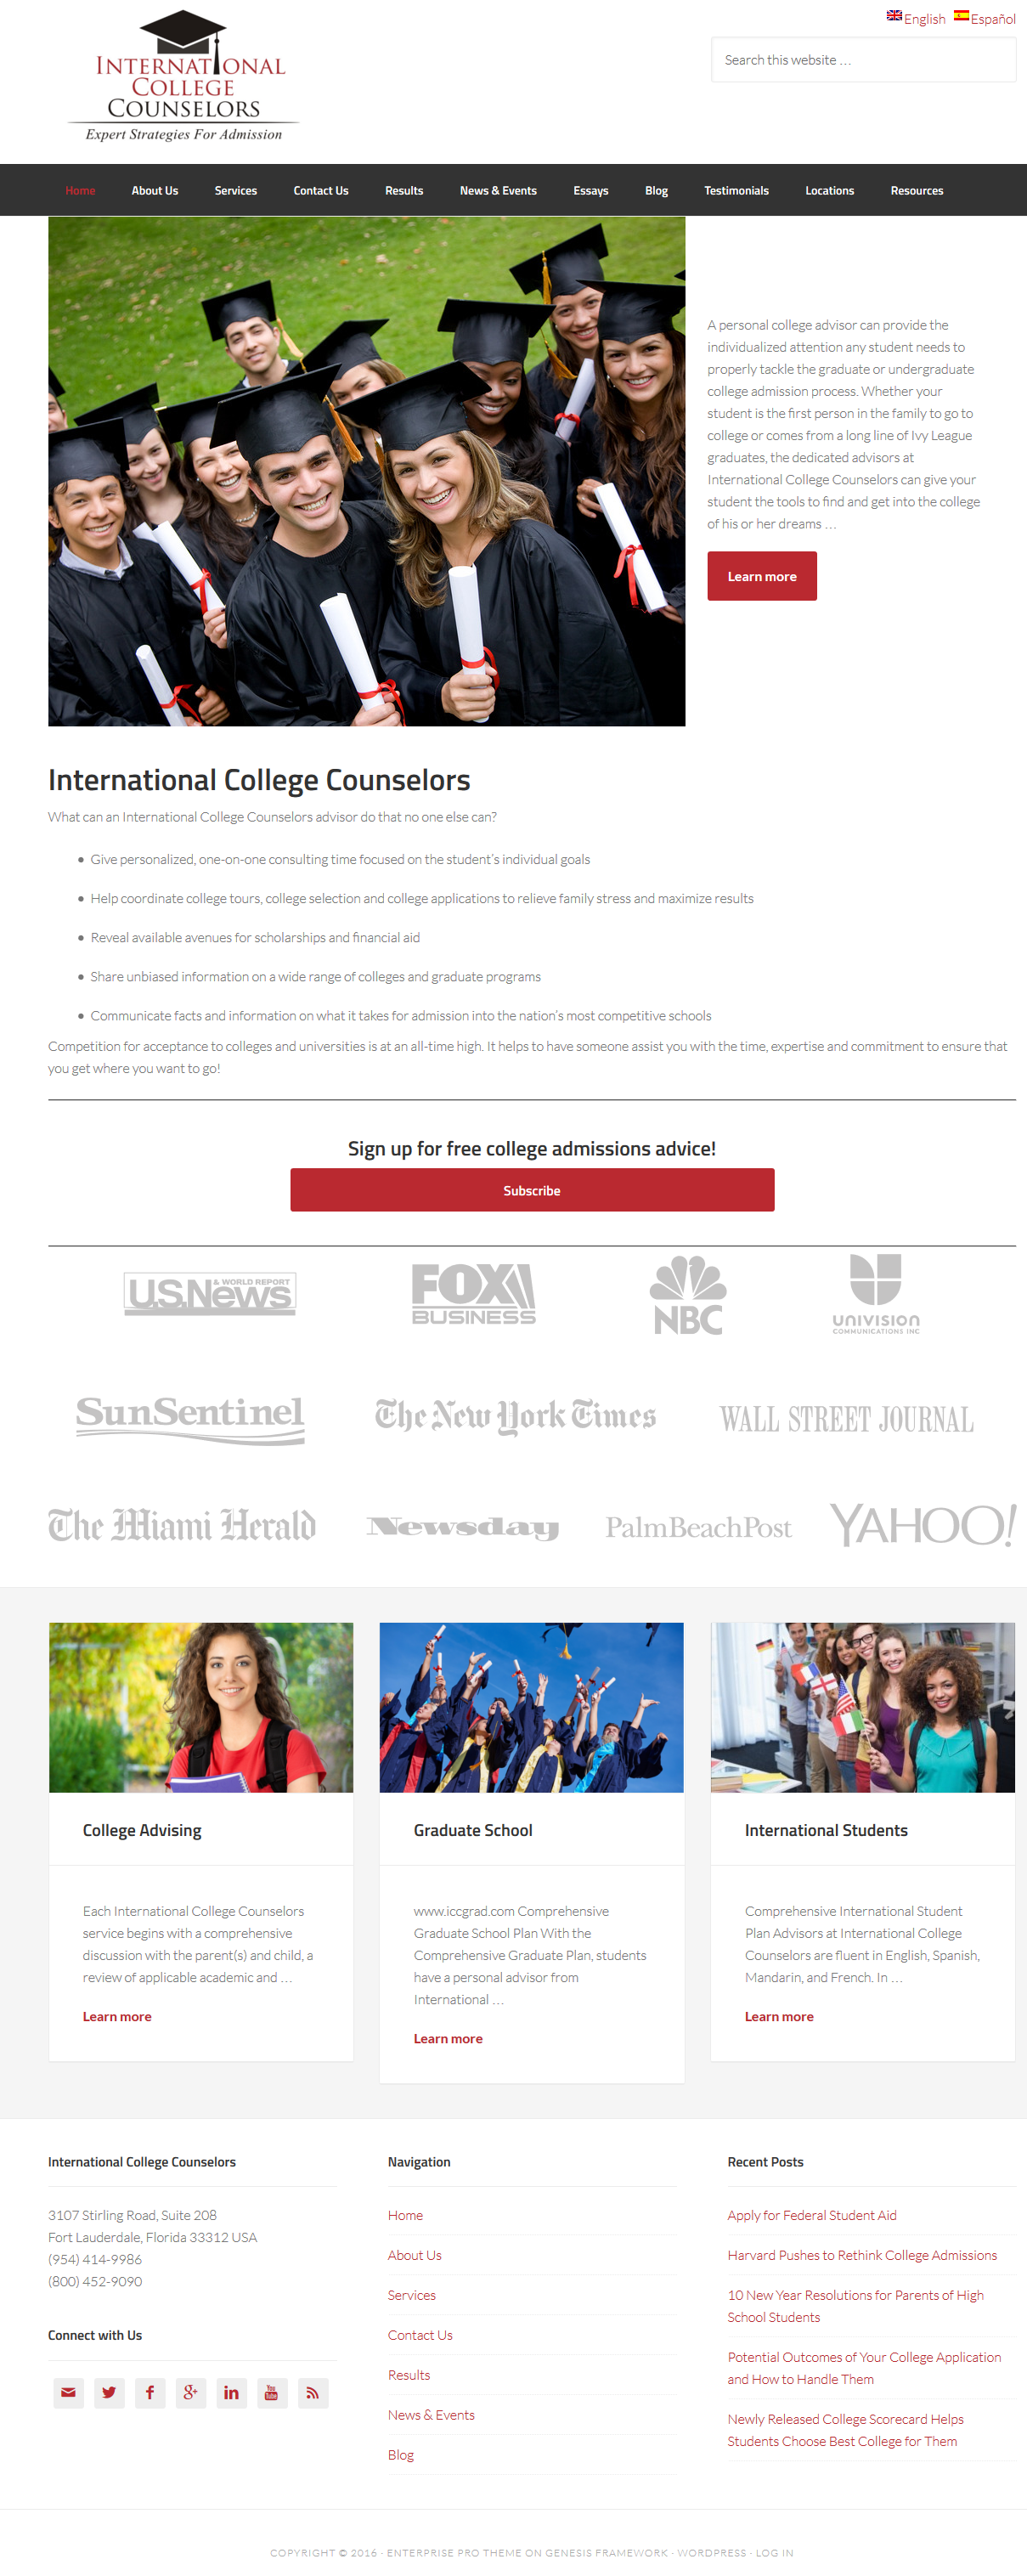 International College Counselors homepage screenshot.